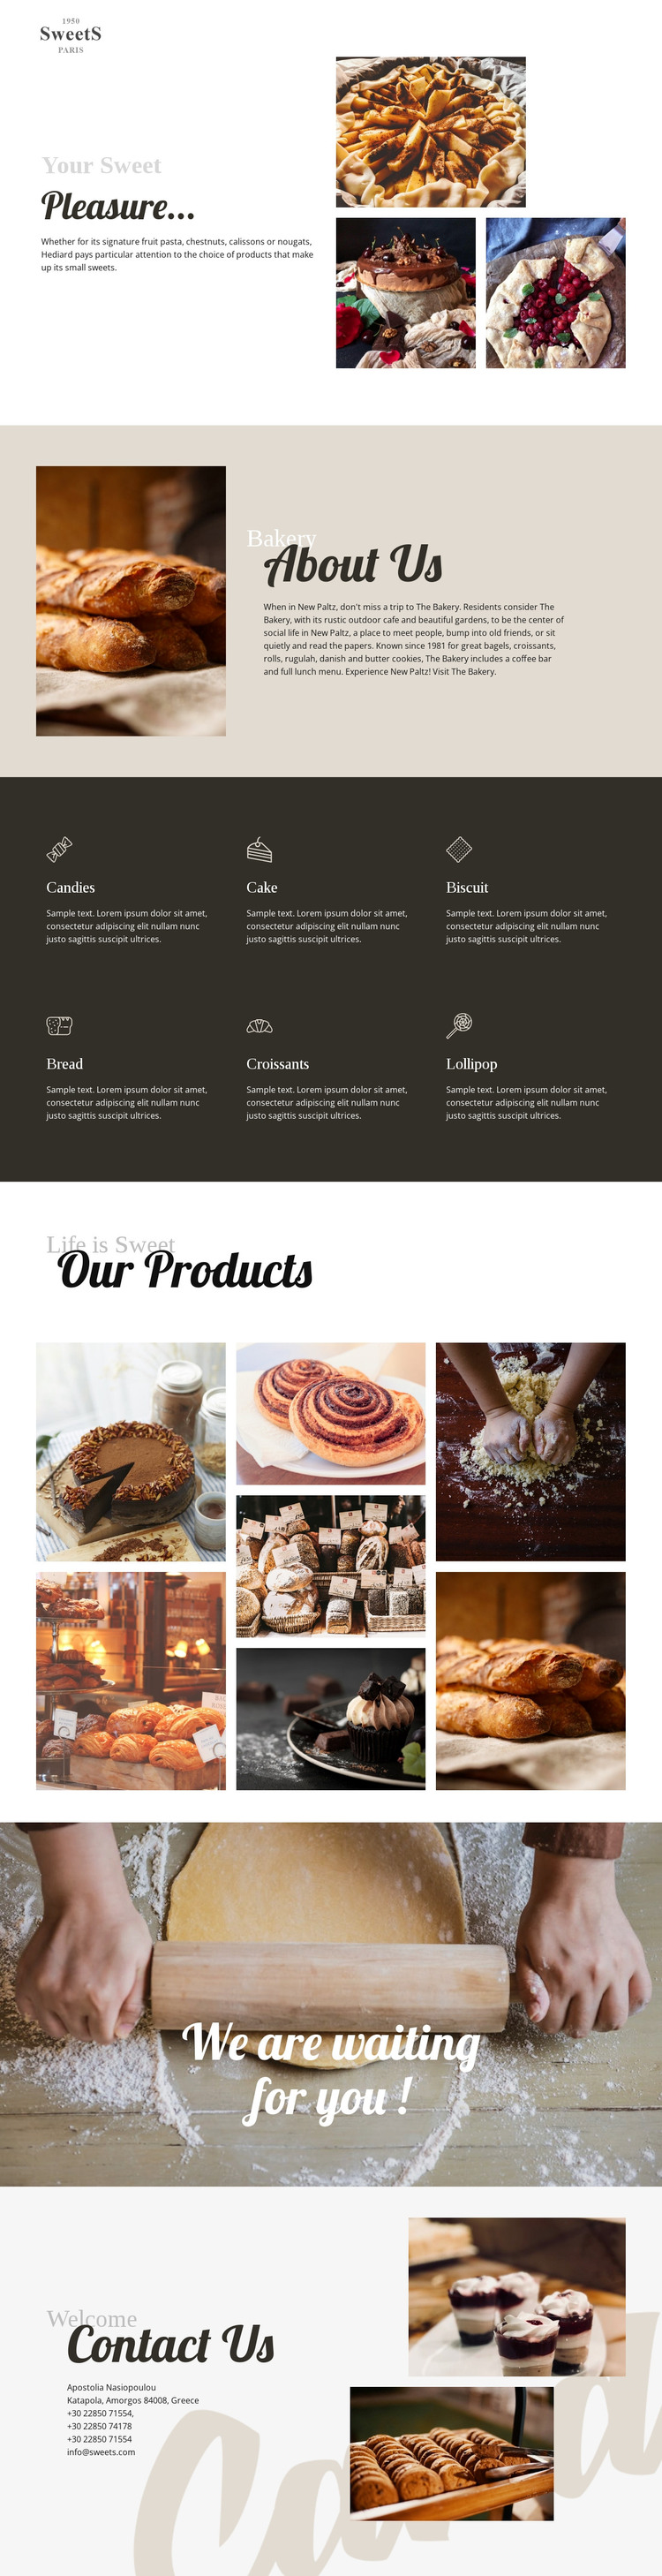 Cakes and baking food WordPress Theme